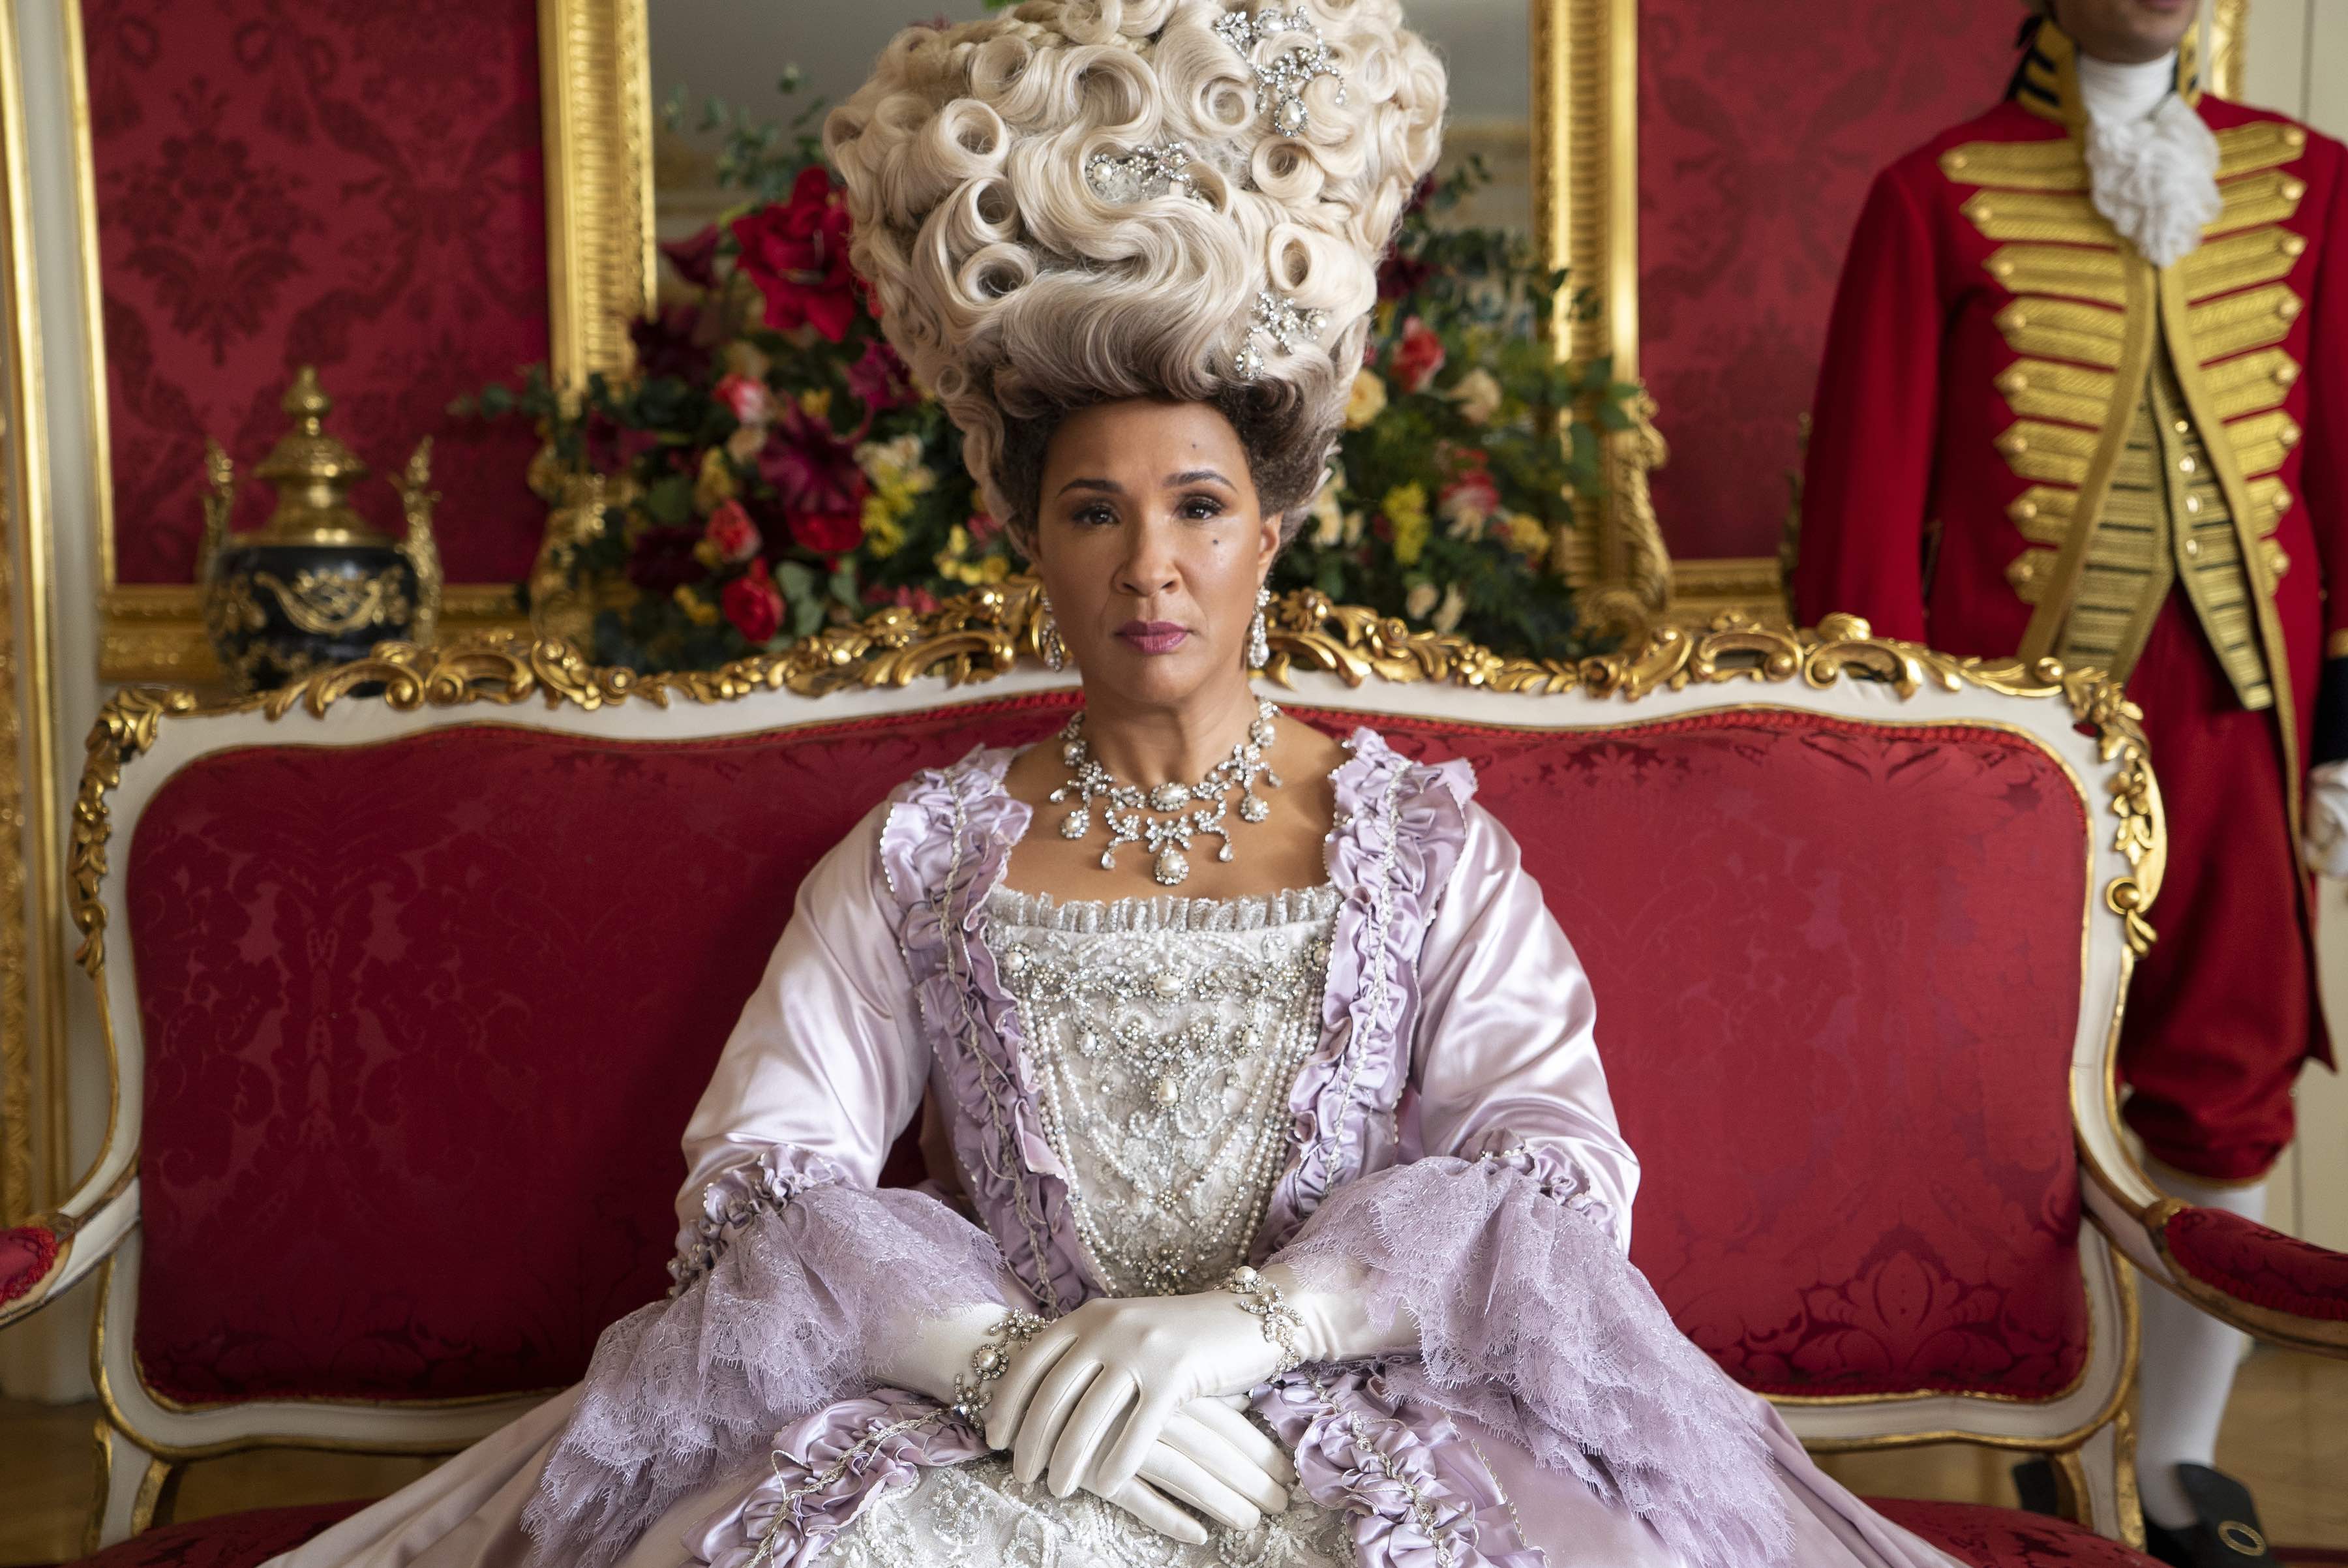 Bridgerton Season 2 Cast on Netflix - Golda Rosheuvel as Queen Charlotte